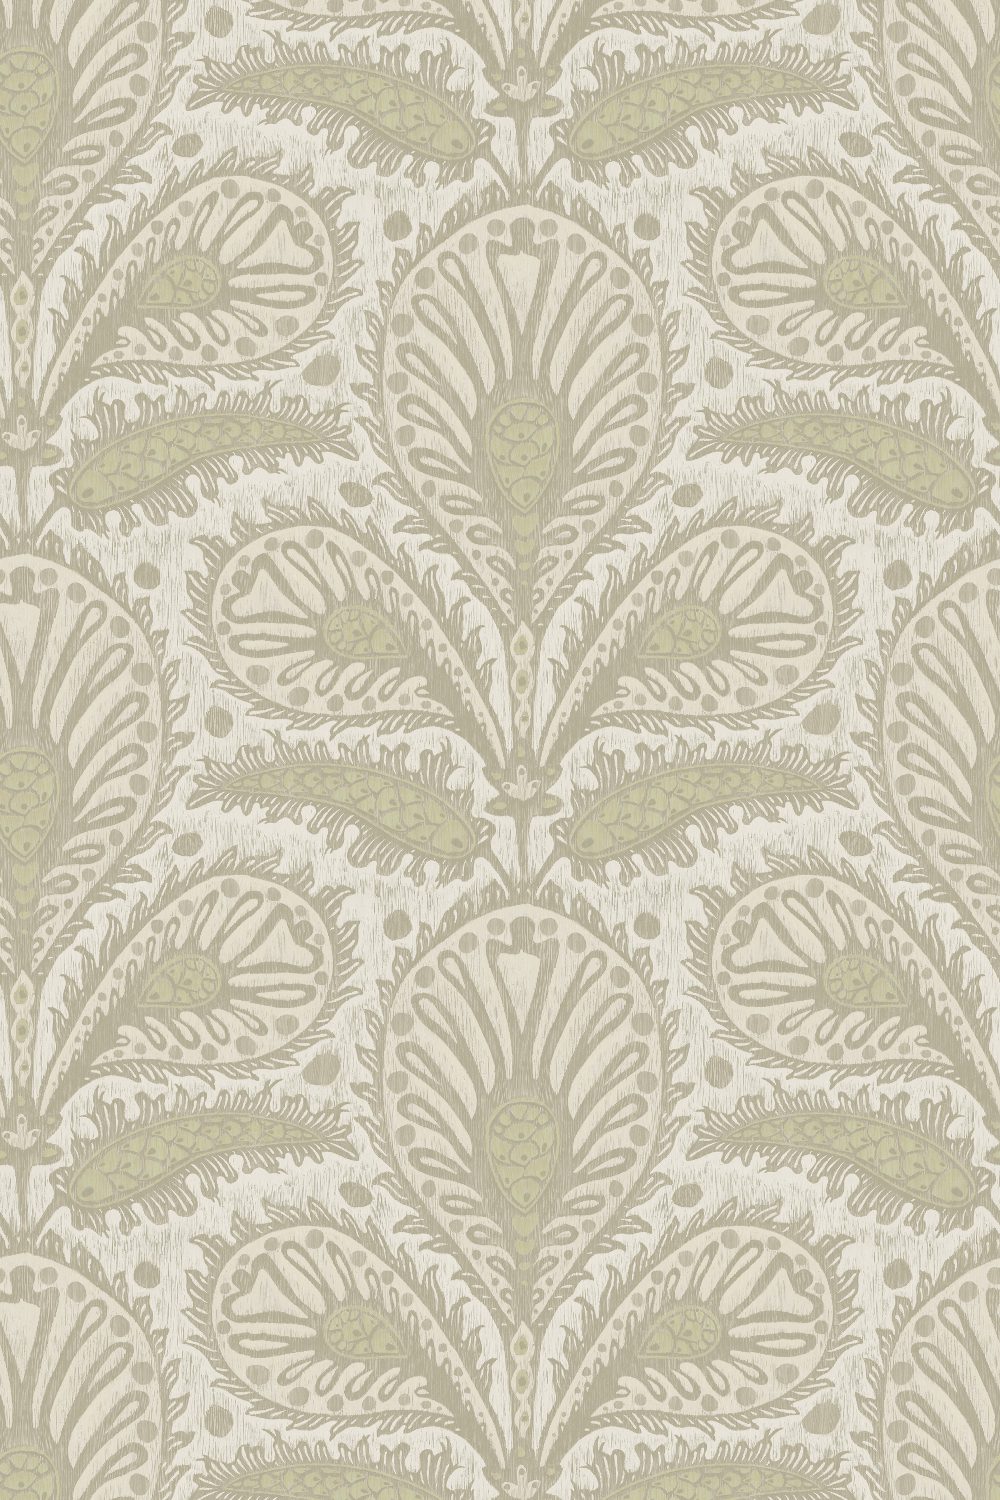 Josephine-Munsey-Ikat-clover-wallpaper-large-scale-ogee-shape-design-foliage-print-paisley-pattern-four-colour-print-sage